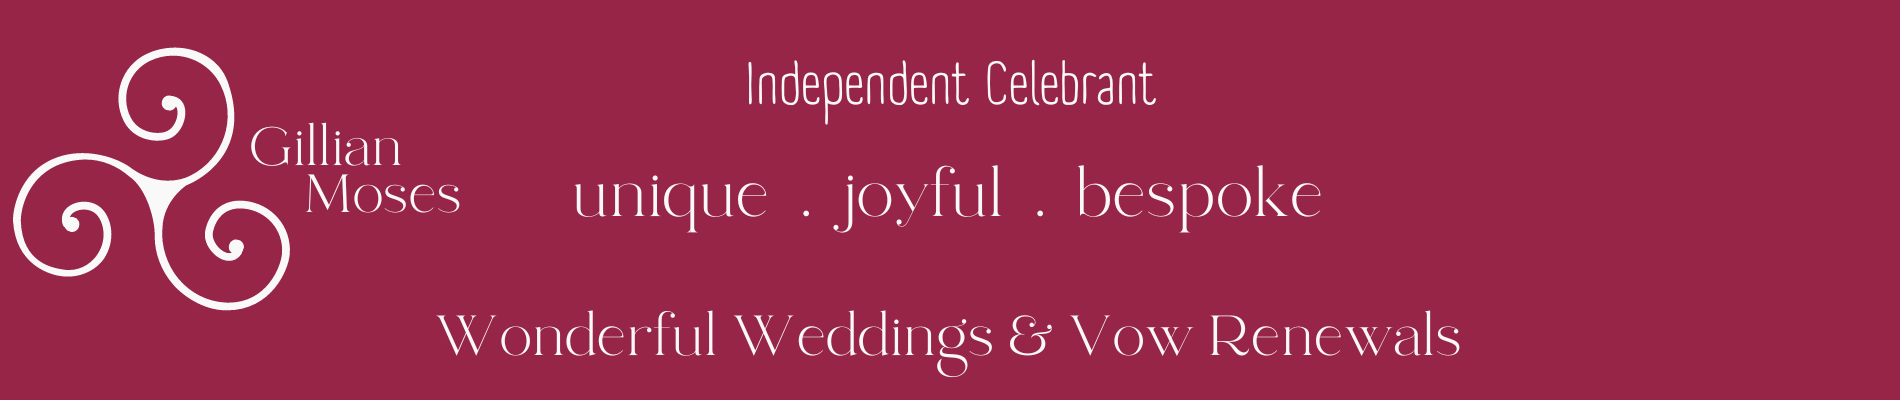 Gillian Moses Independent Celebrant offering unique, joyful, bespoke Weddings & Vow Renewal Ceremonies